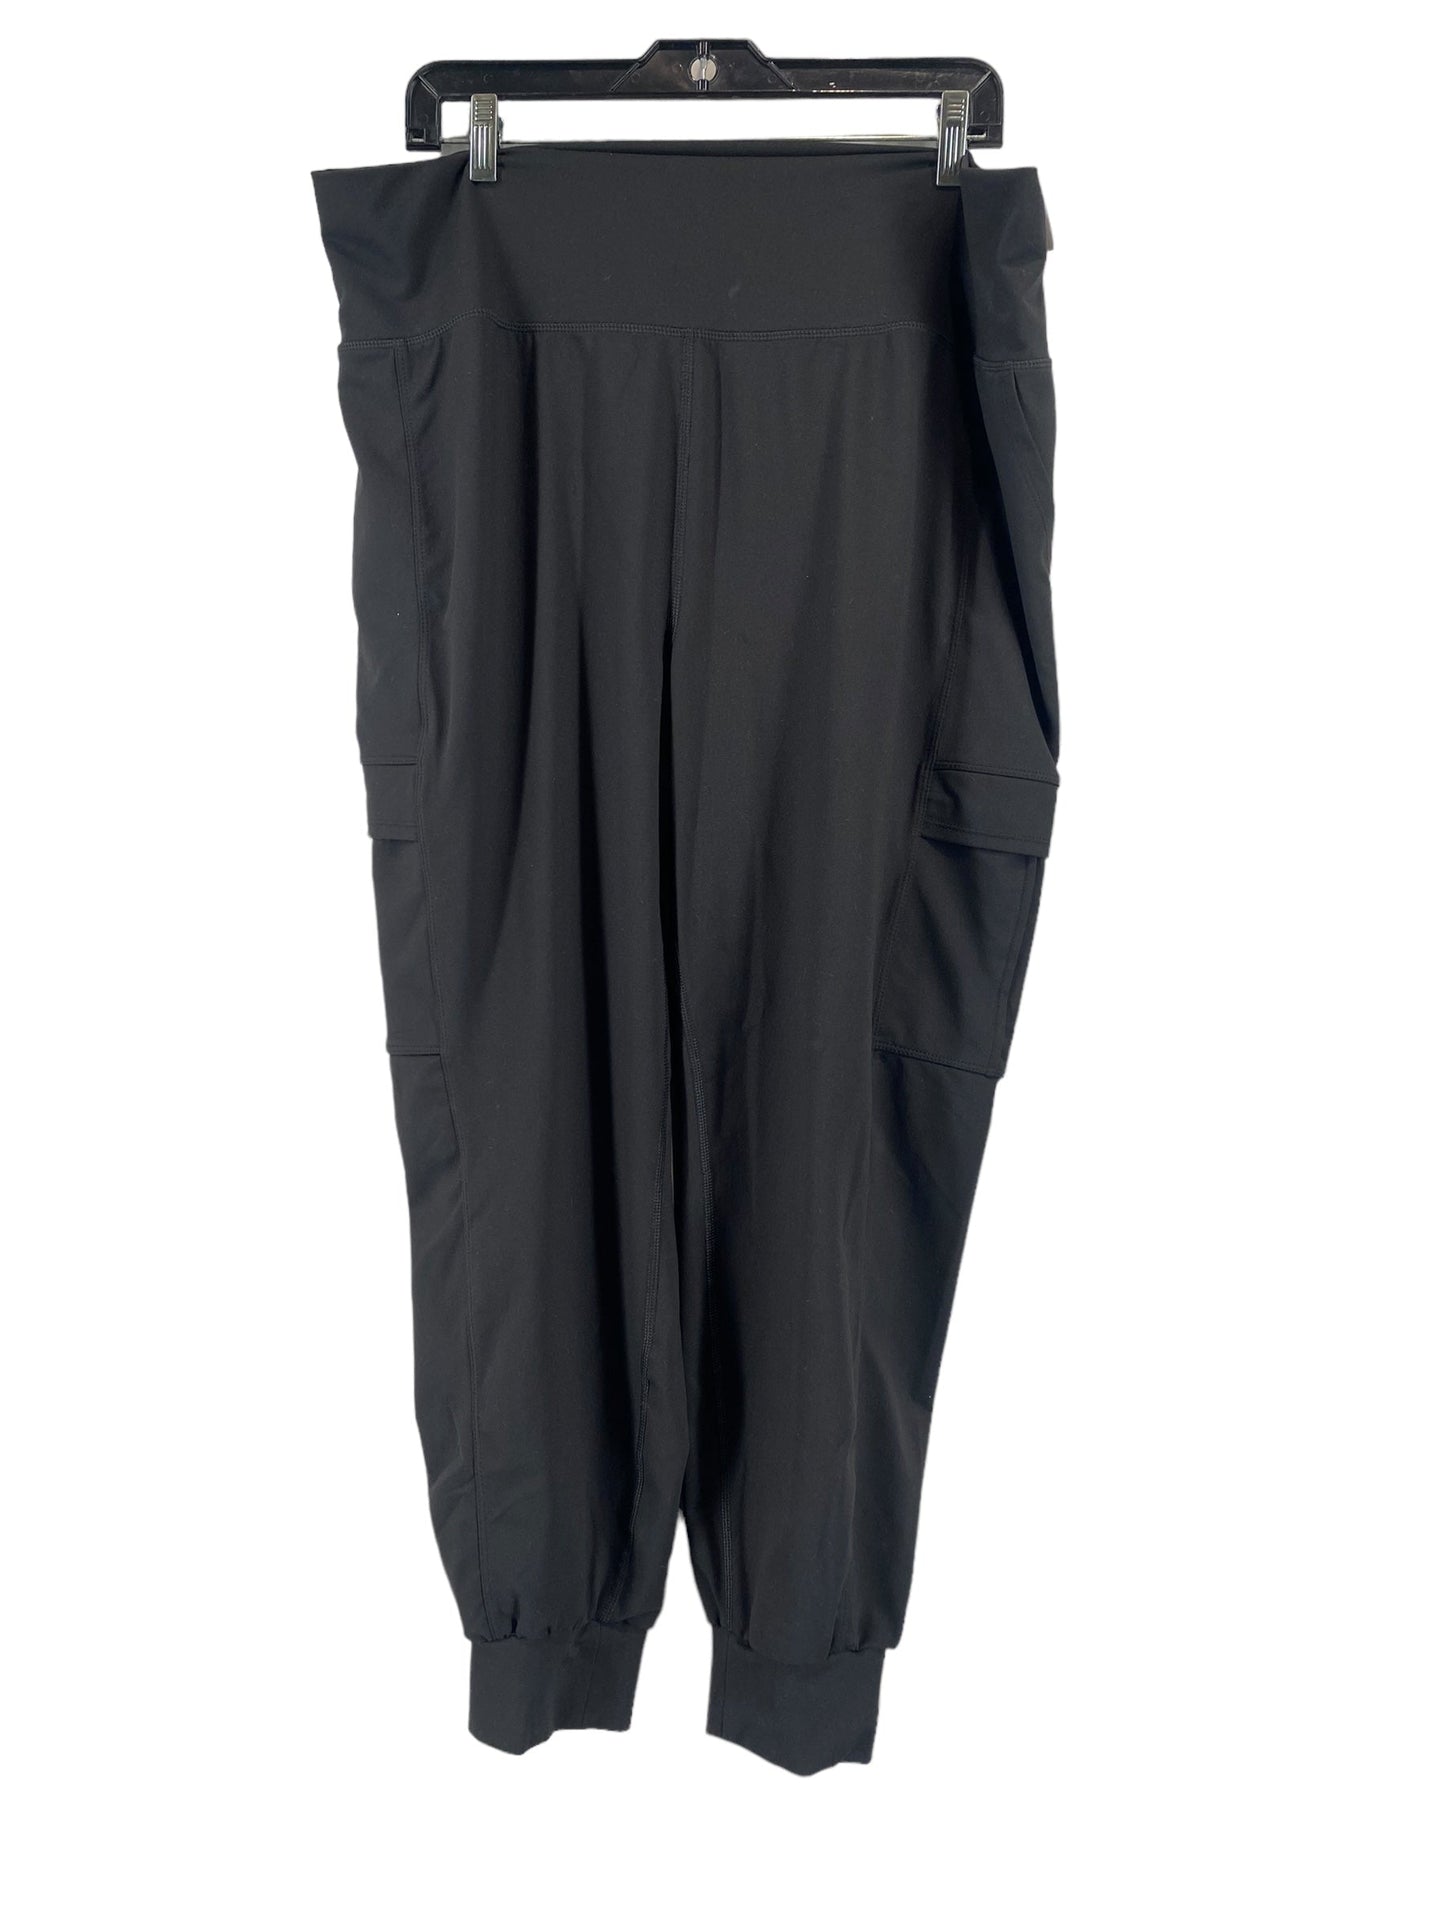 Black Athletic Pants Avia, Size 2x